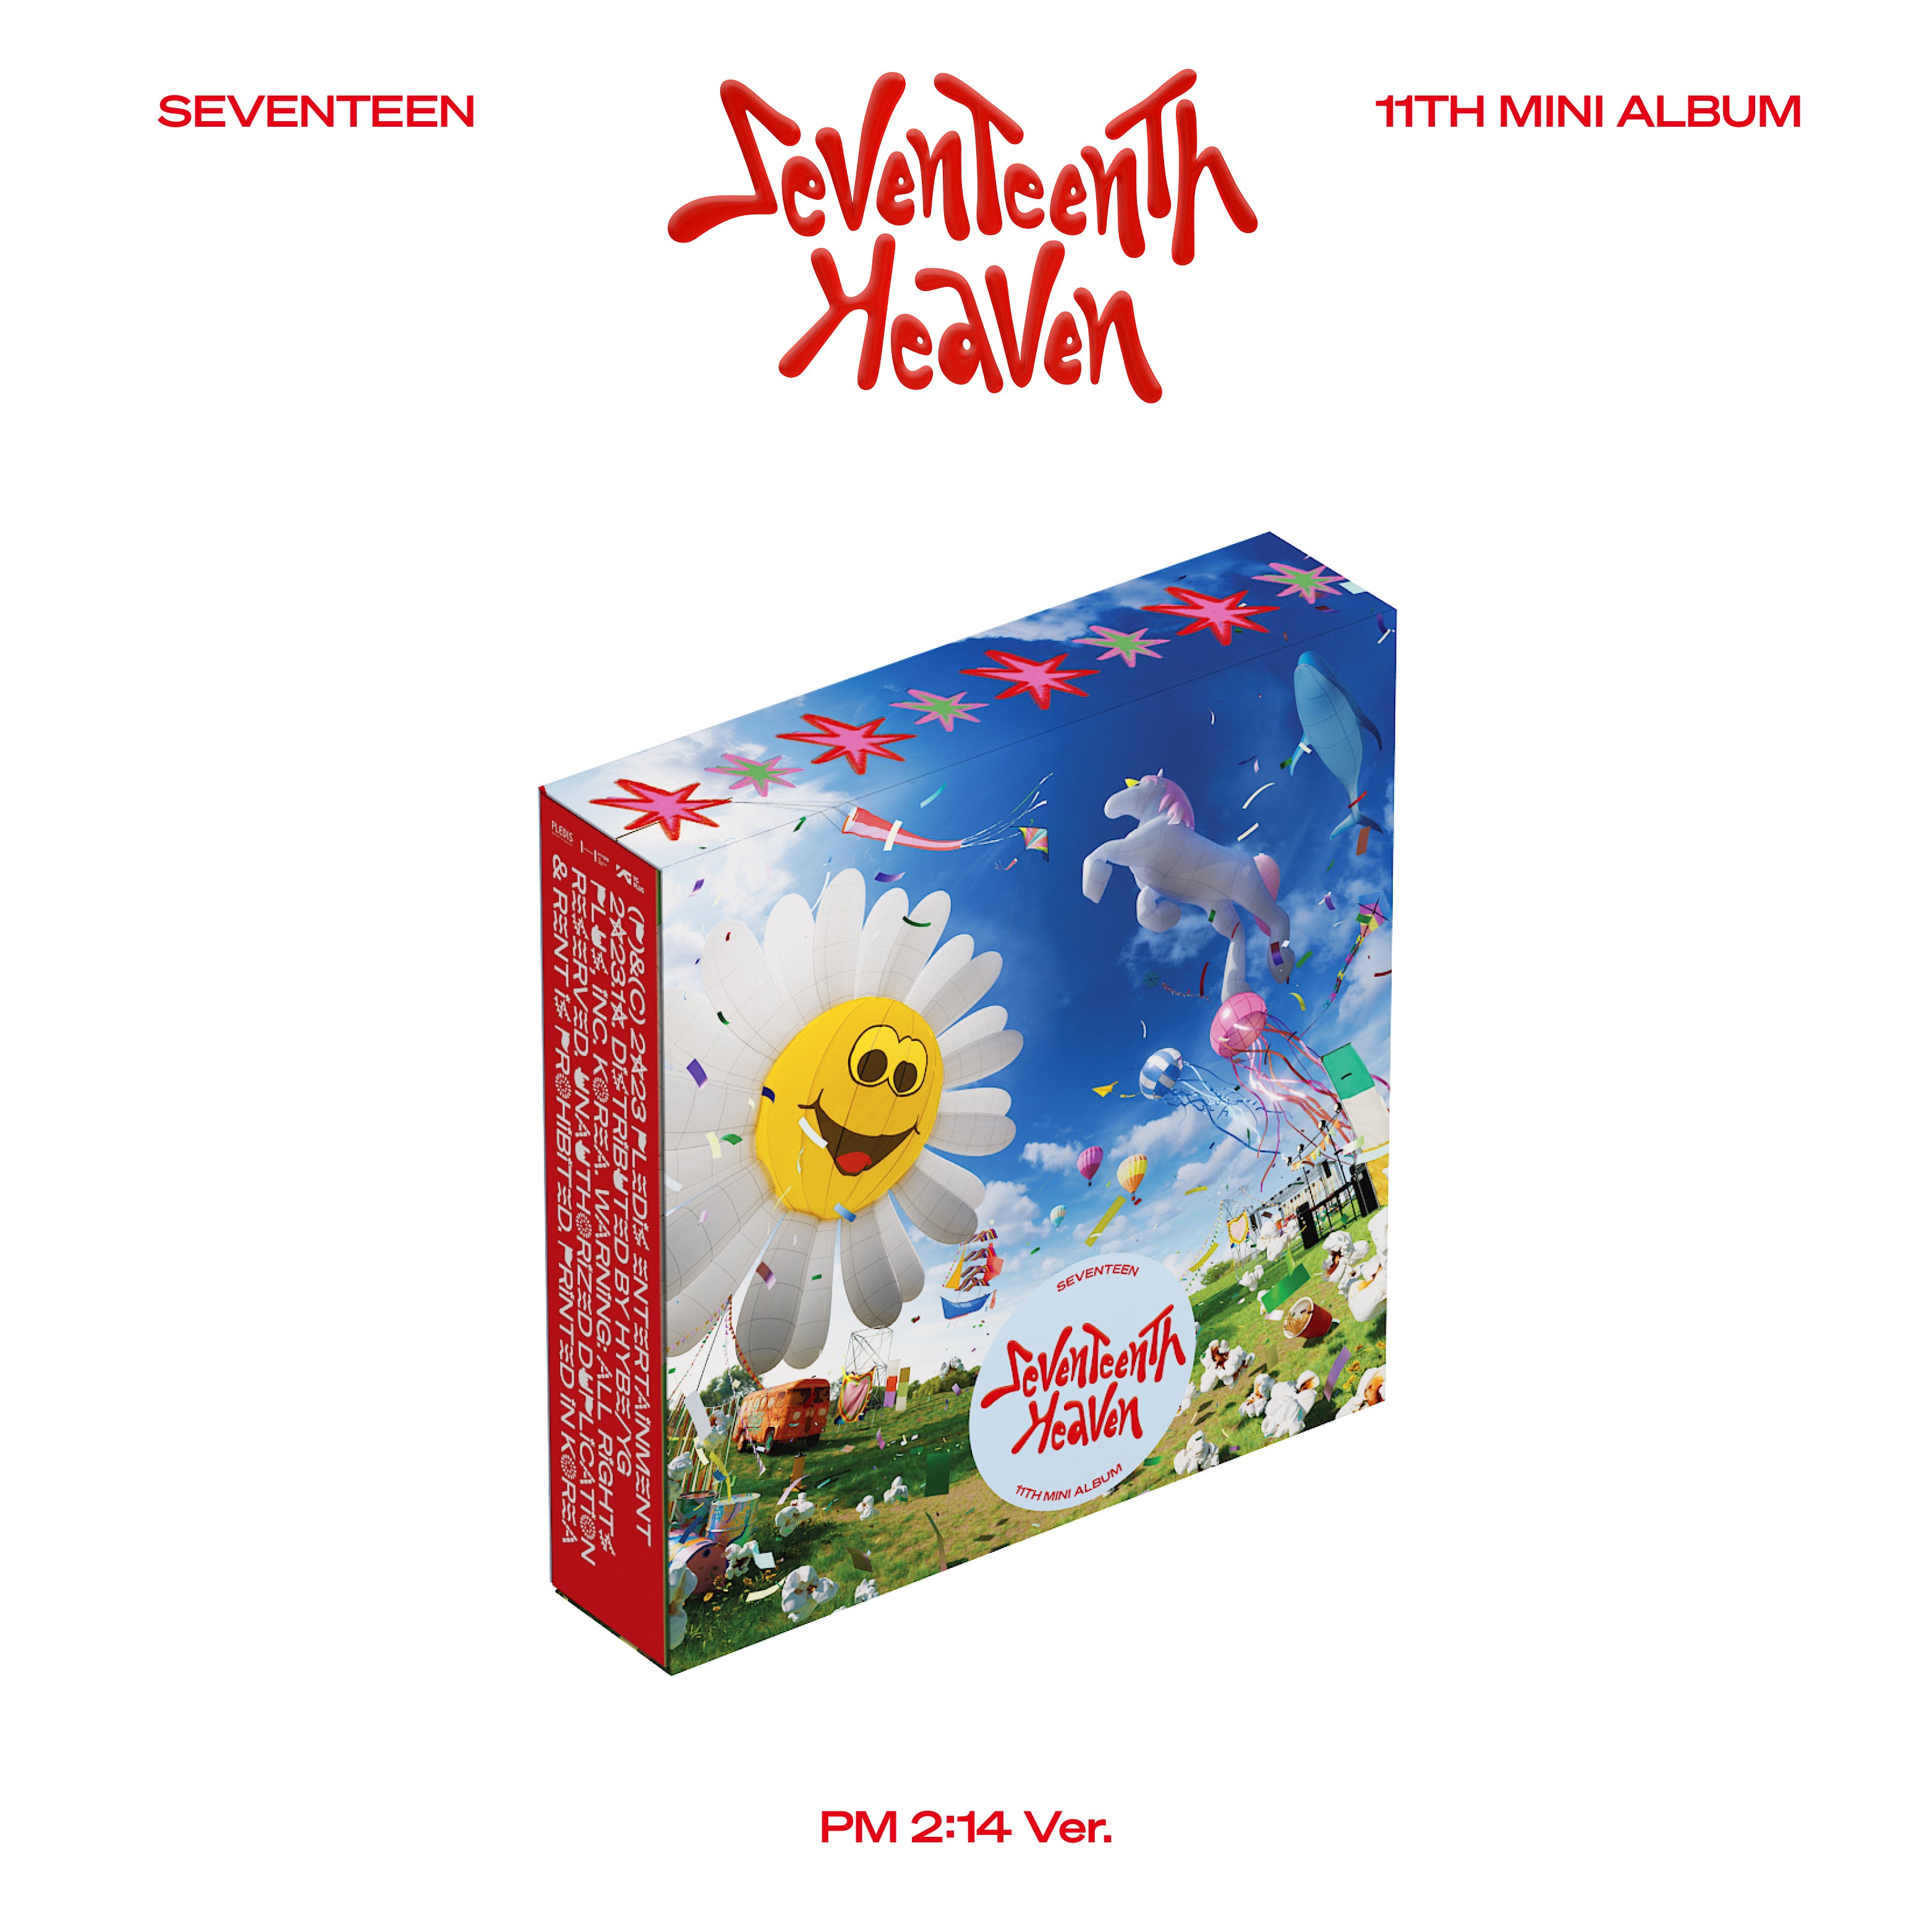 SEVENTEEN - SEVENTEEN 11th Mini Album 'SEVENTEENTH HEAVEN' (PM 2:14 Ver.) -  CD –